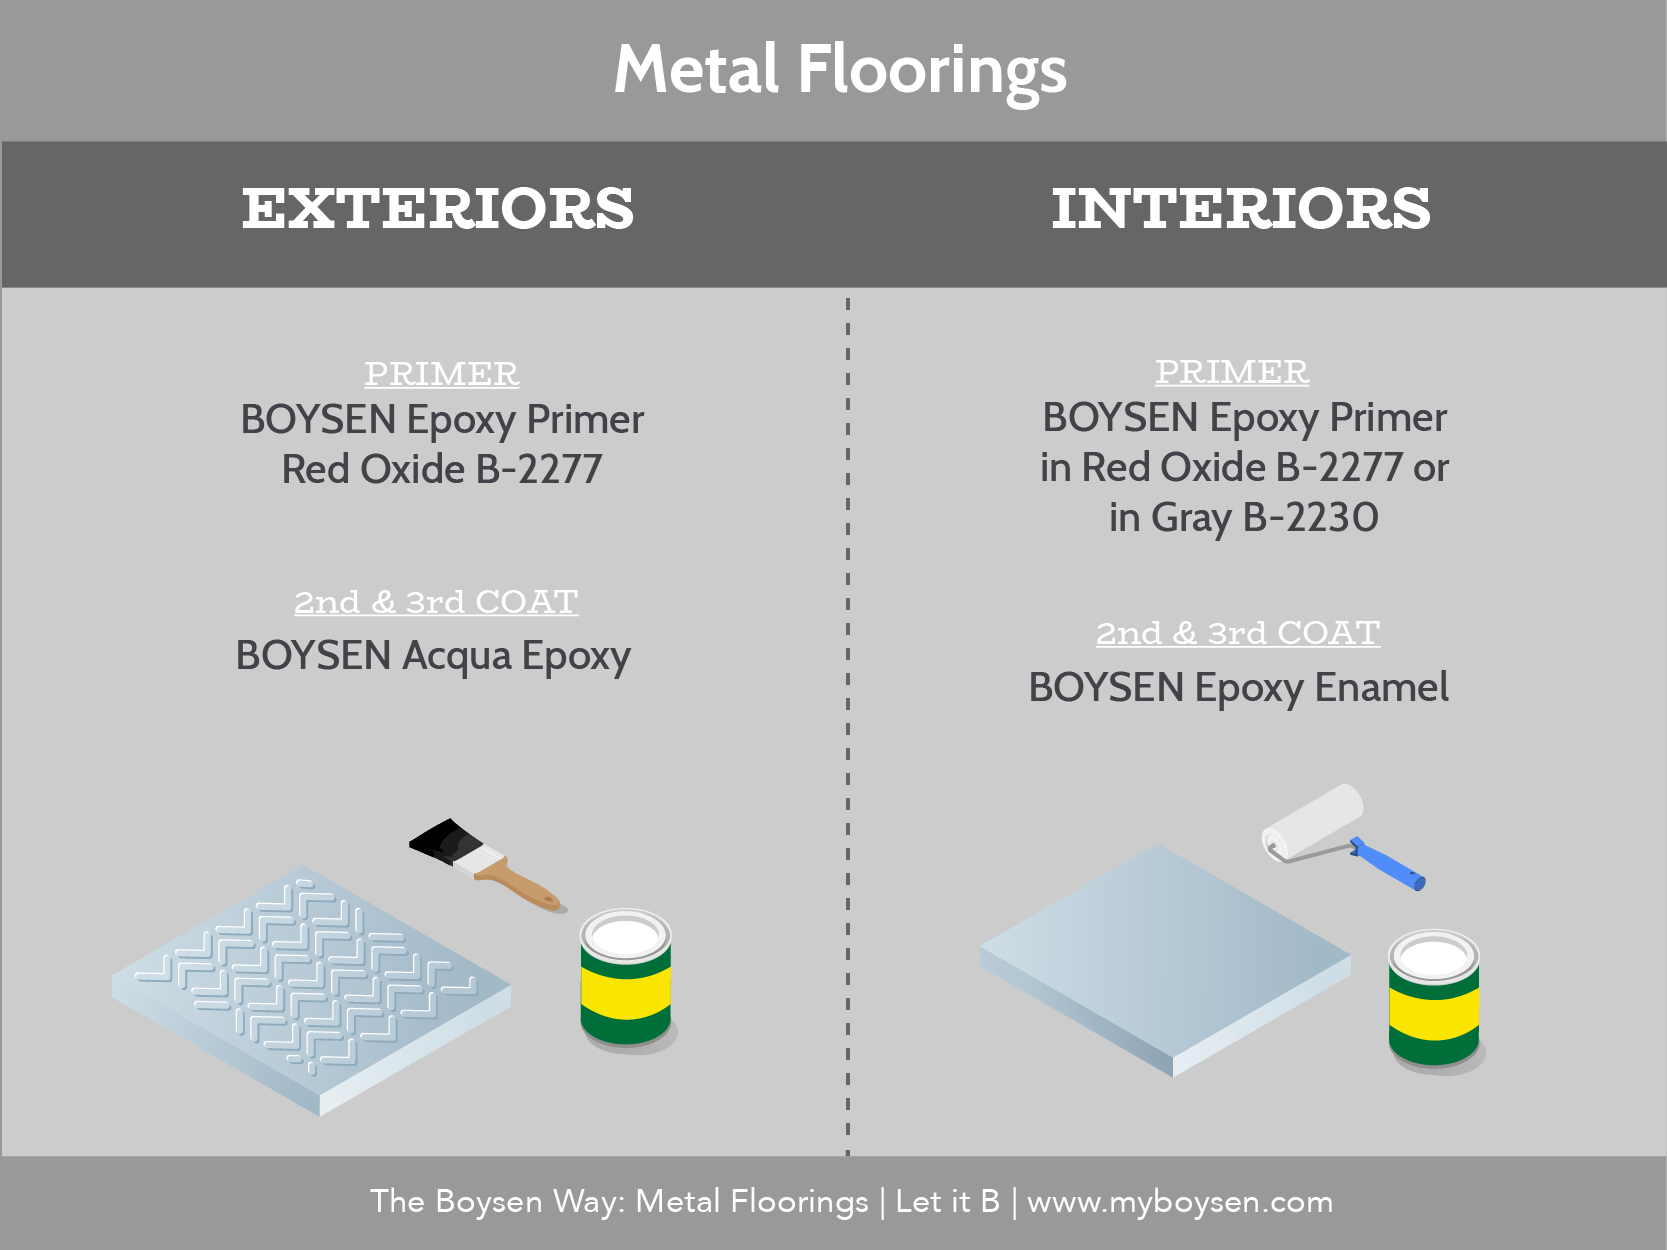 The Boysen Way: Metal Floorings | MyBoysen